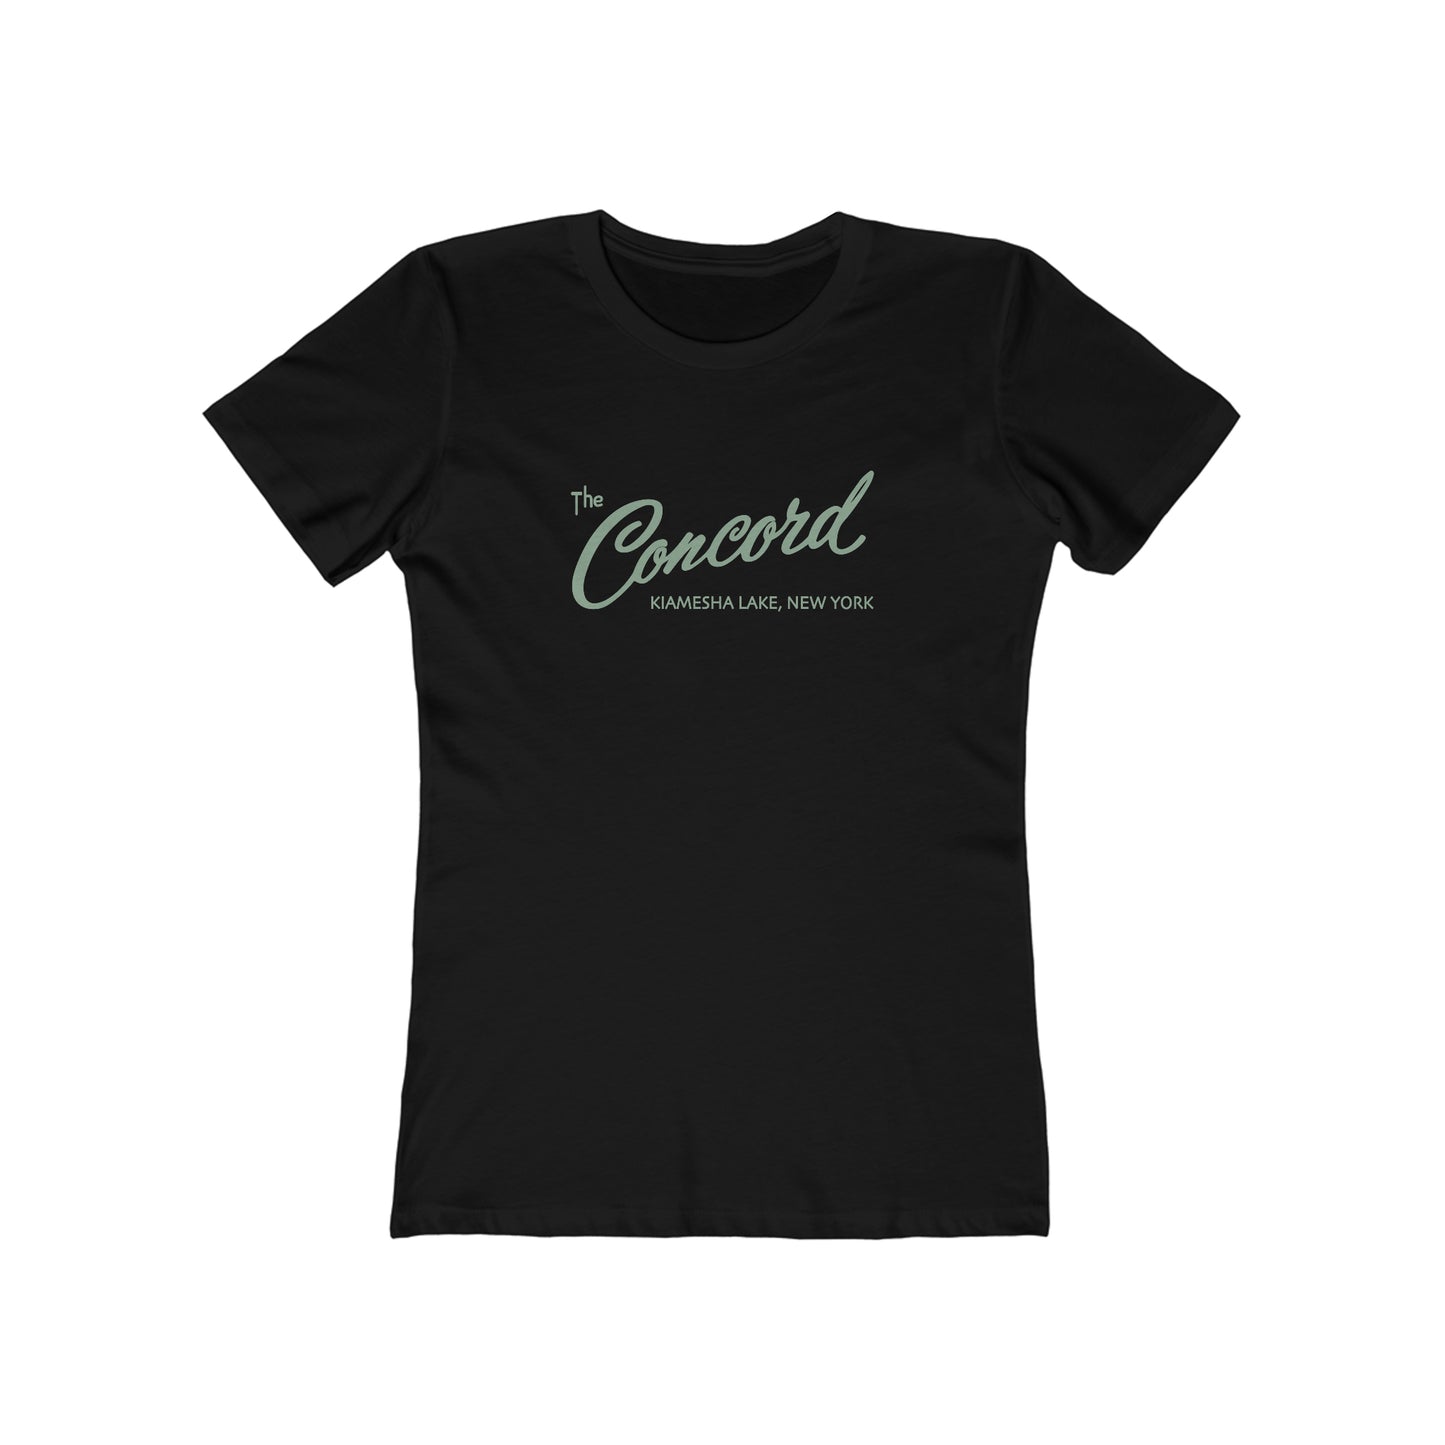 The Concord - Catskills - Women's T-Shirt